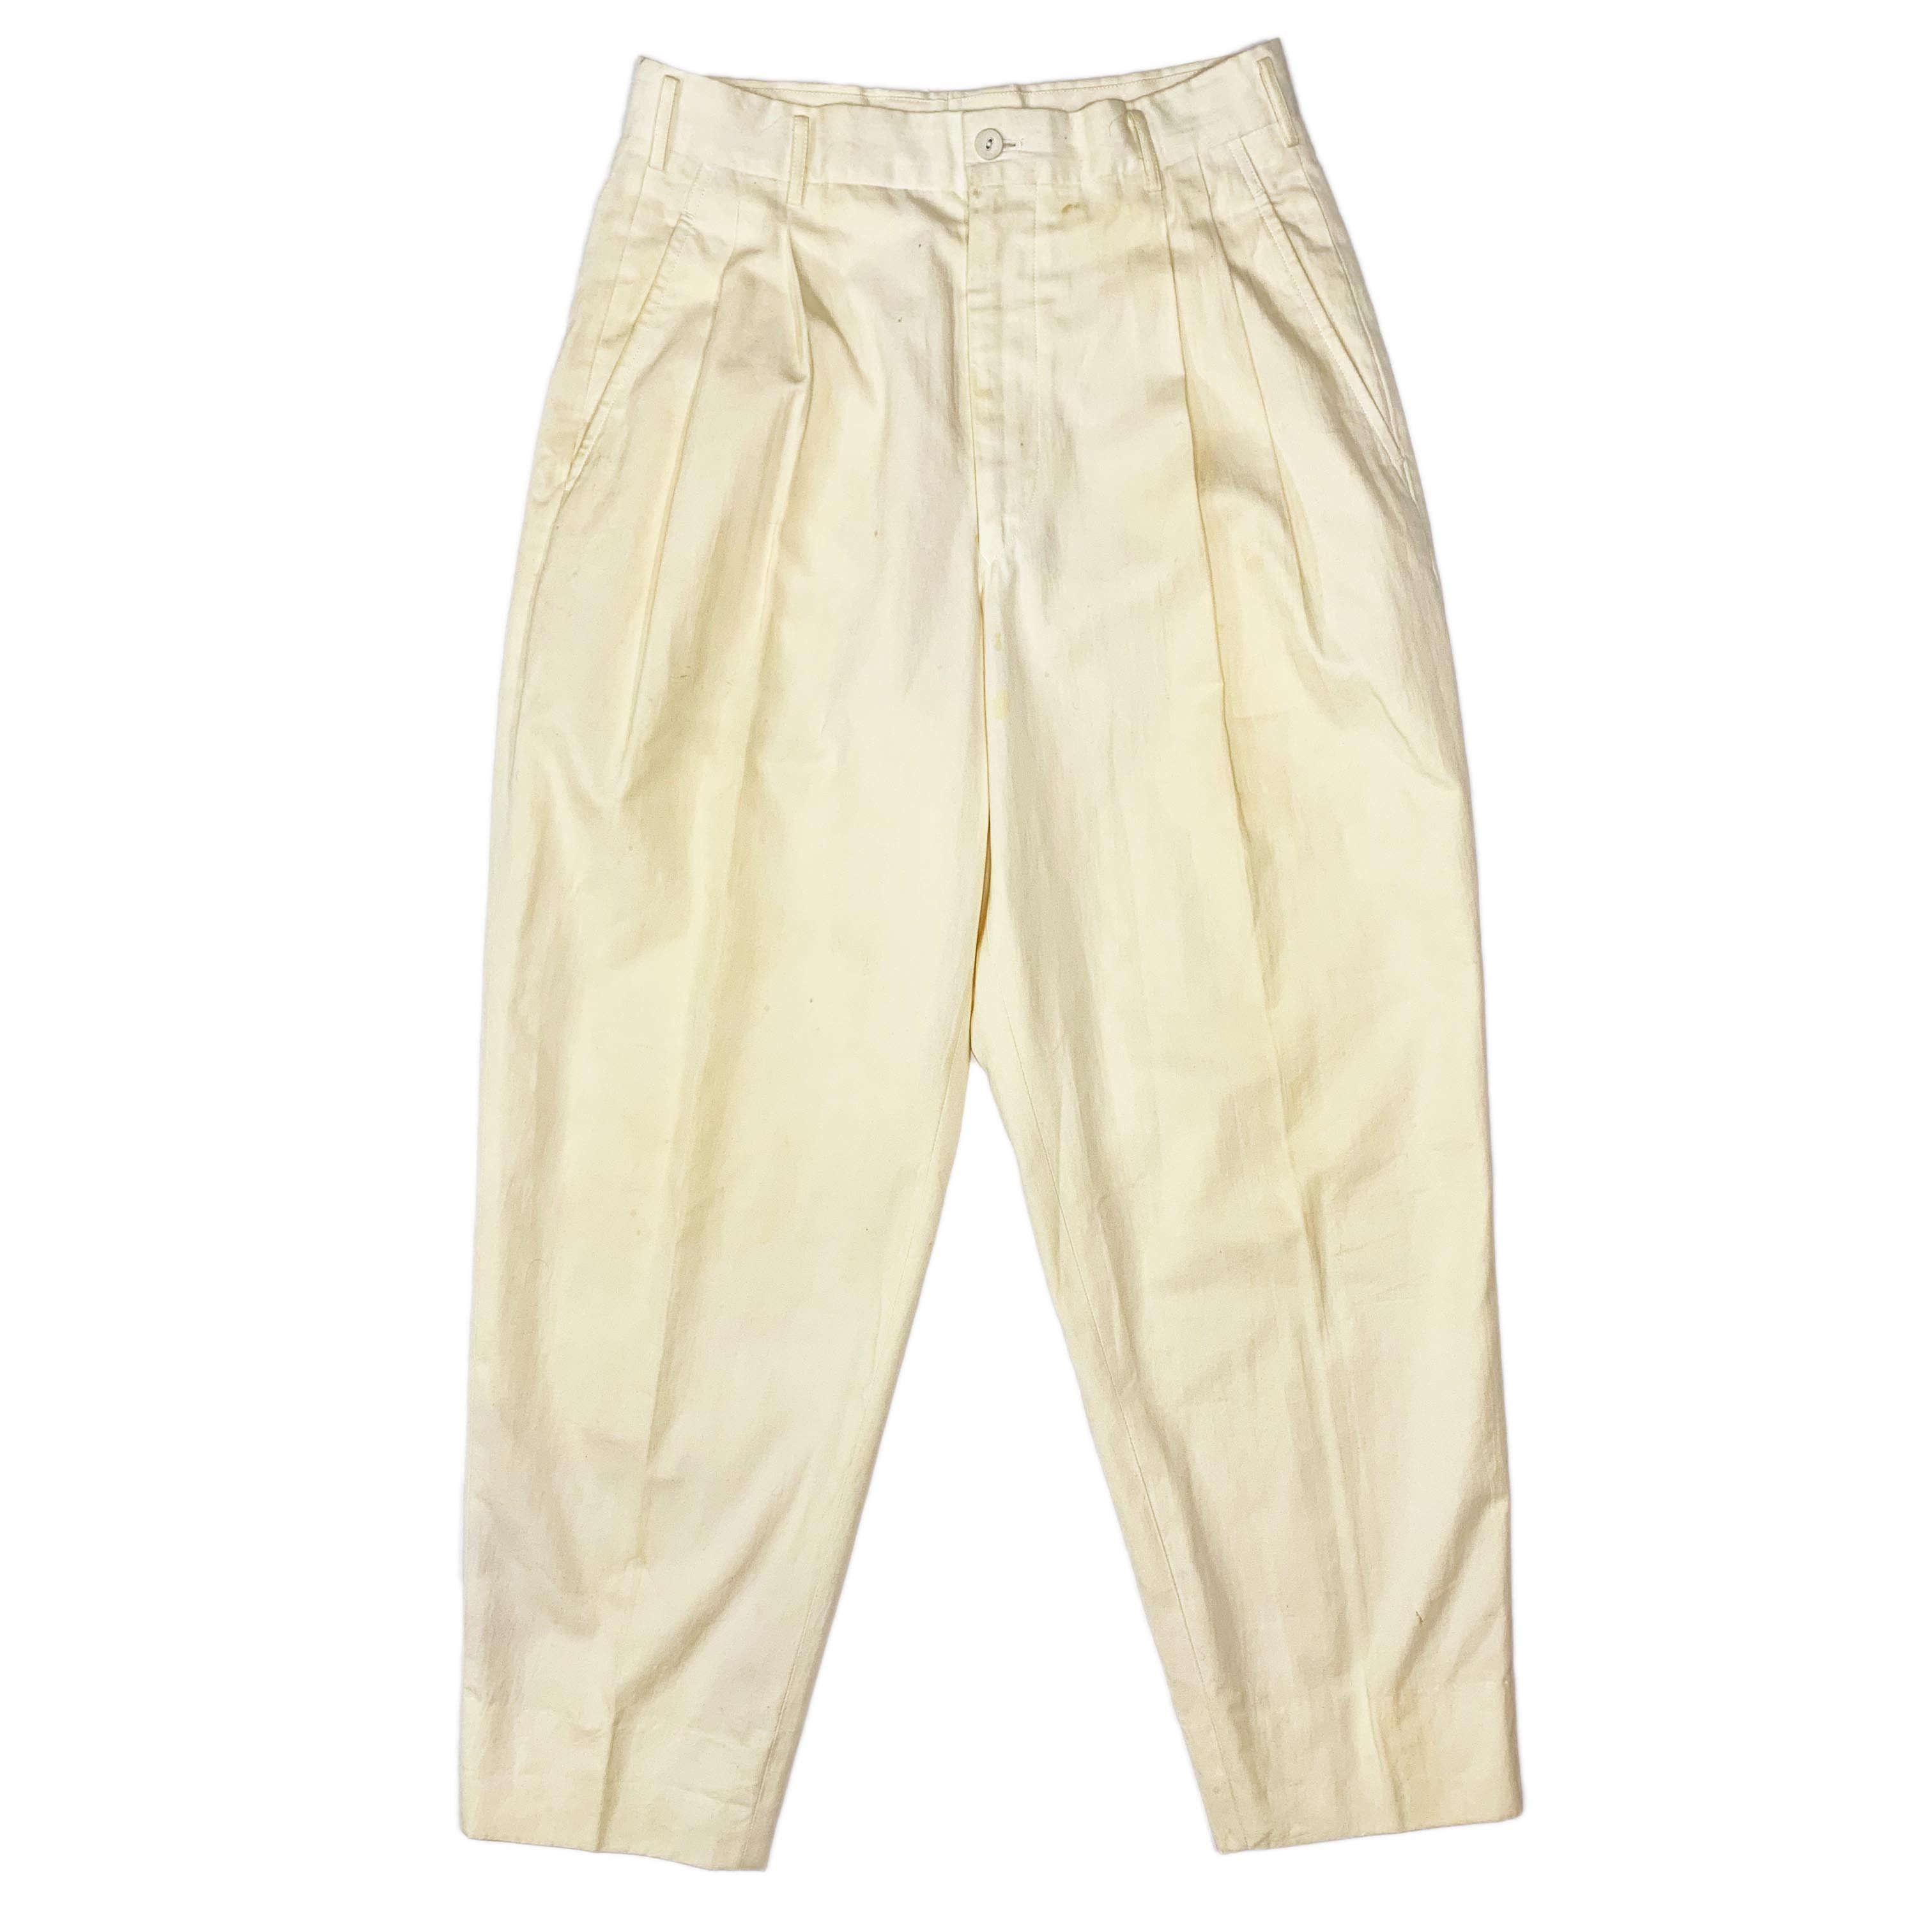 SS87 Cotton Pants - 1